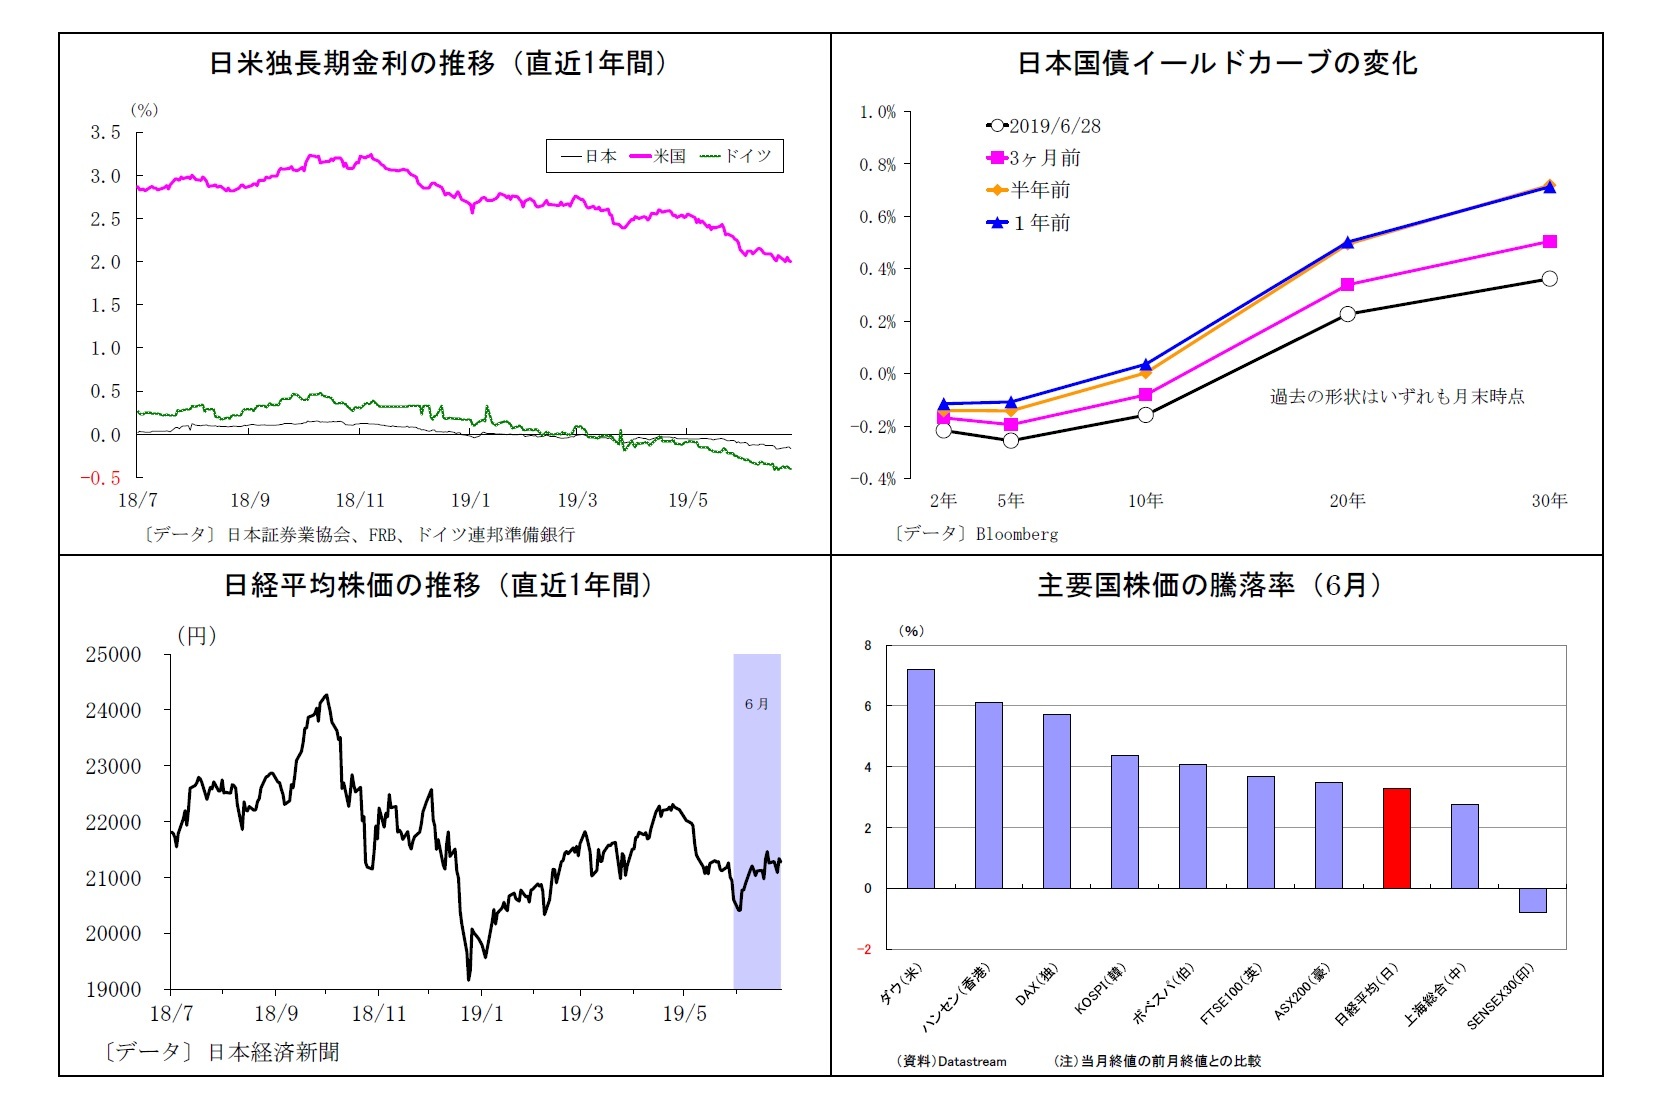 日米独長期金利の推移（直近1年間）/日本国債イールドカーブの変化/日経平均株価の推移（直近1年間）/主要国株価の騰落率（6月）